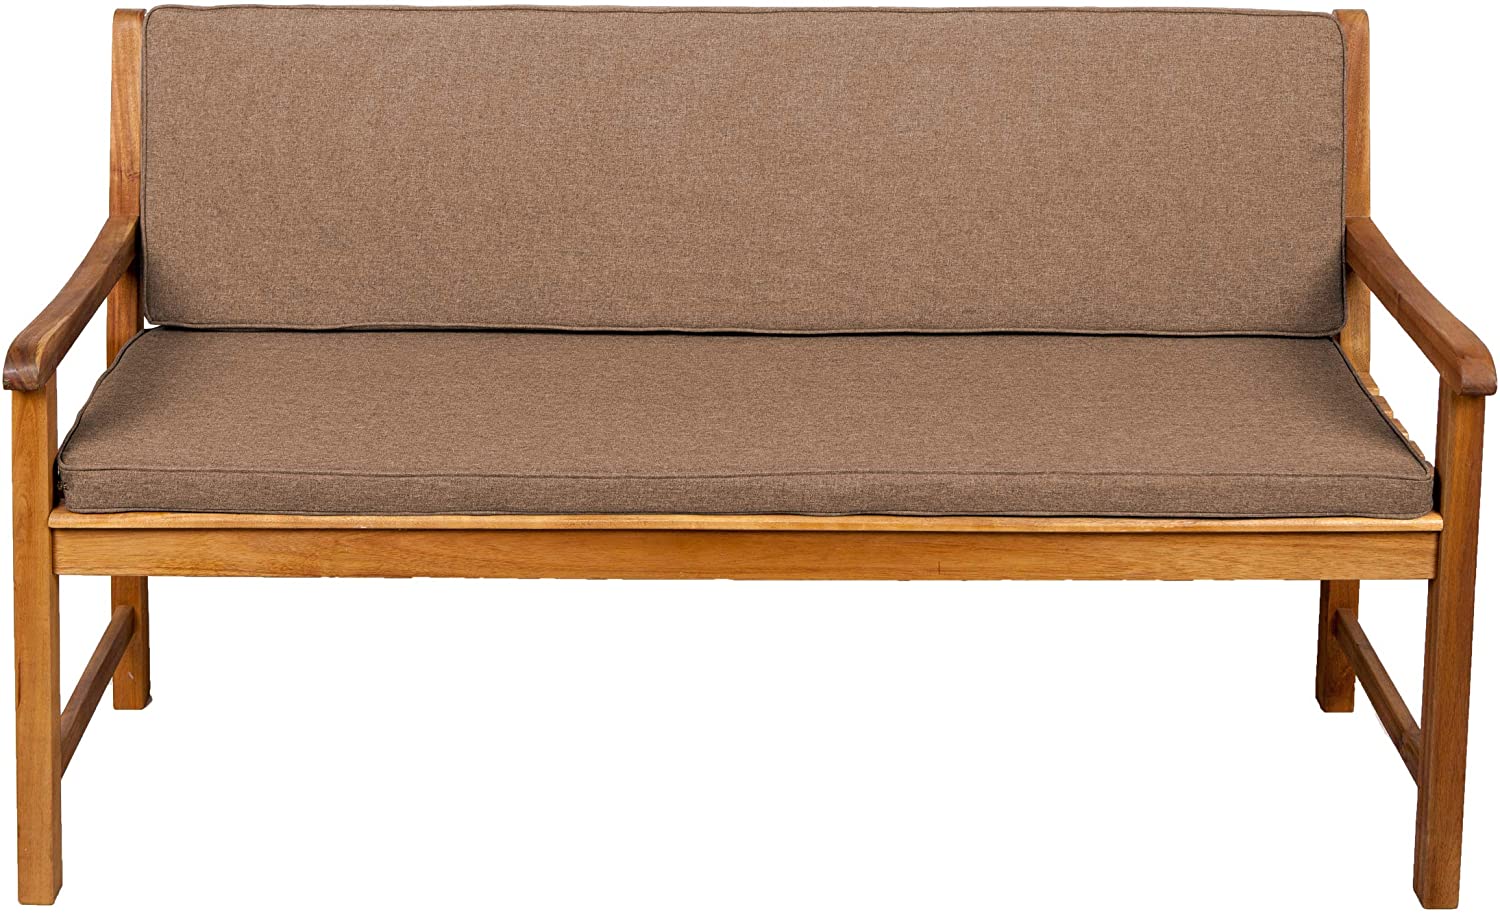 Bench Cushion for Swinging Hammock Set, Smooth Seat Cushion and Backrest